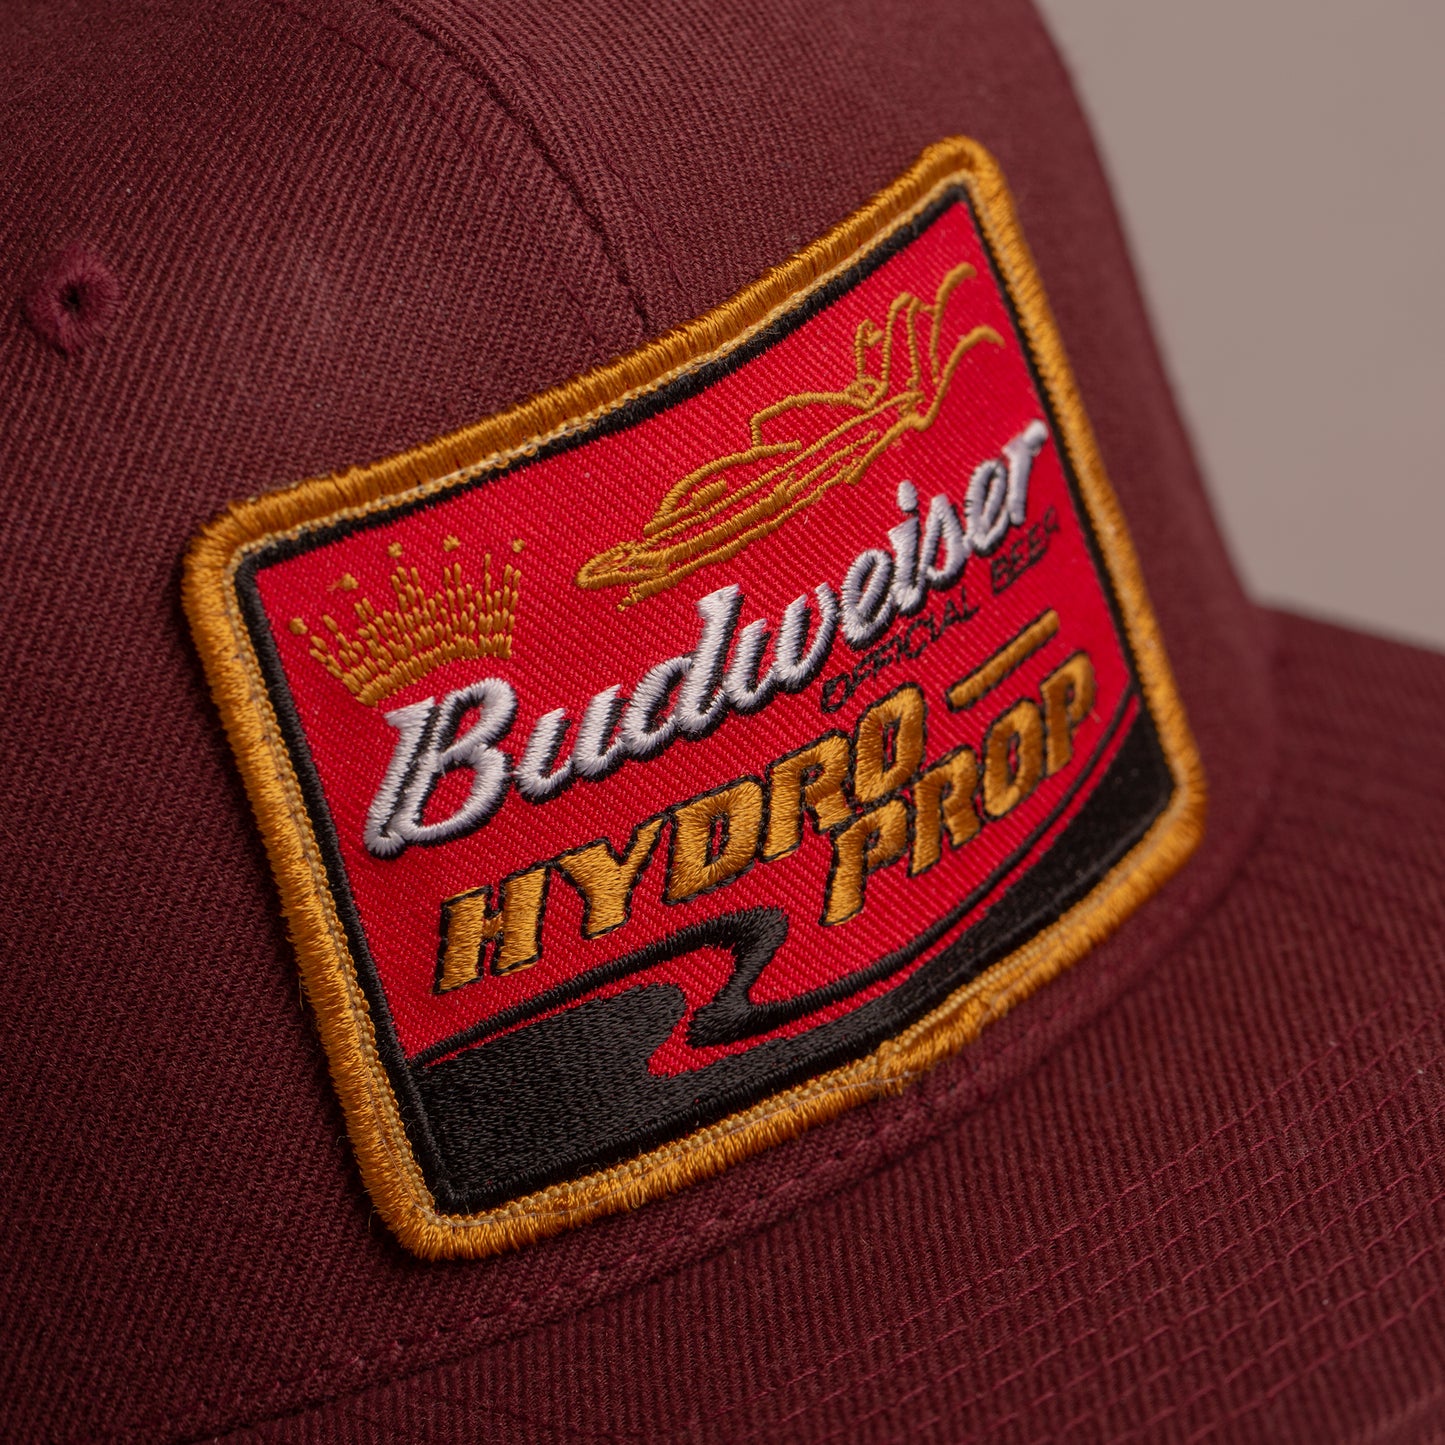 Budweiser Hydro Prop